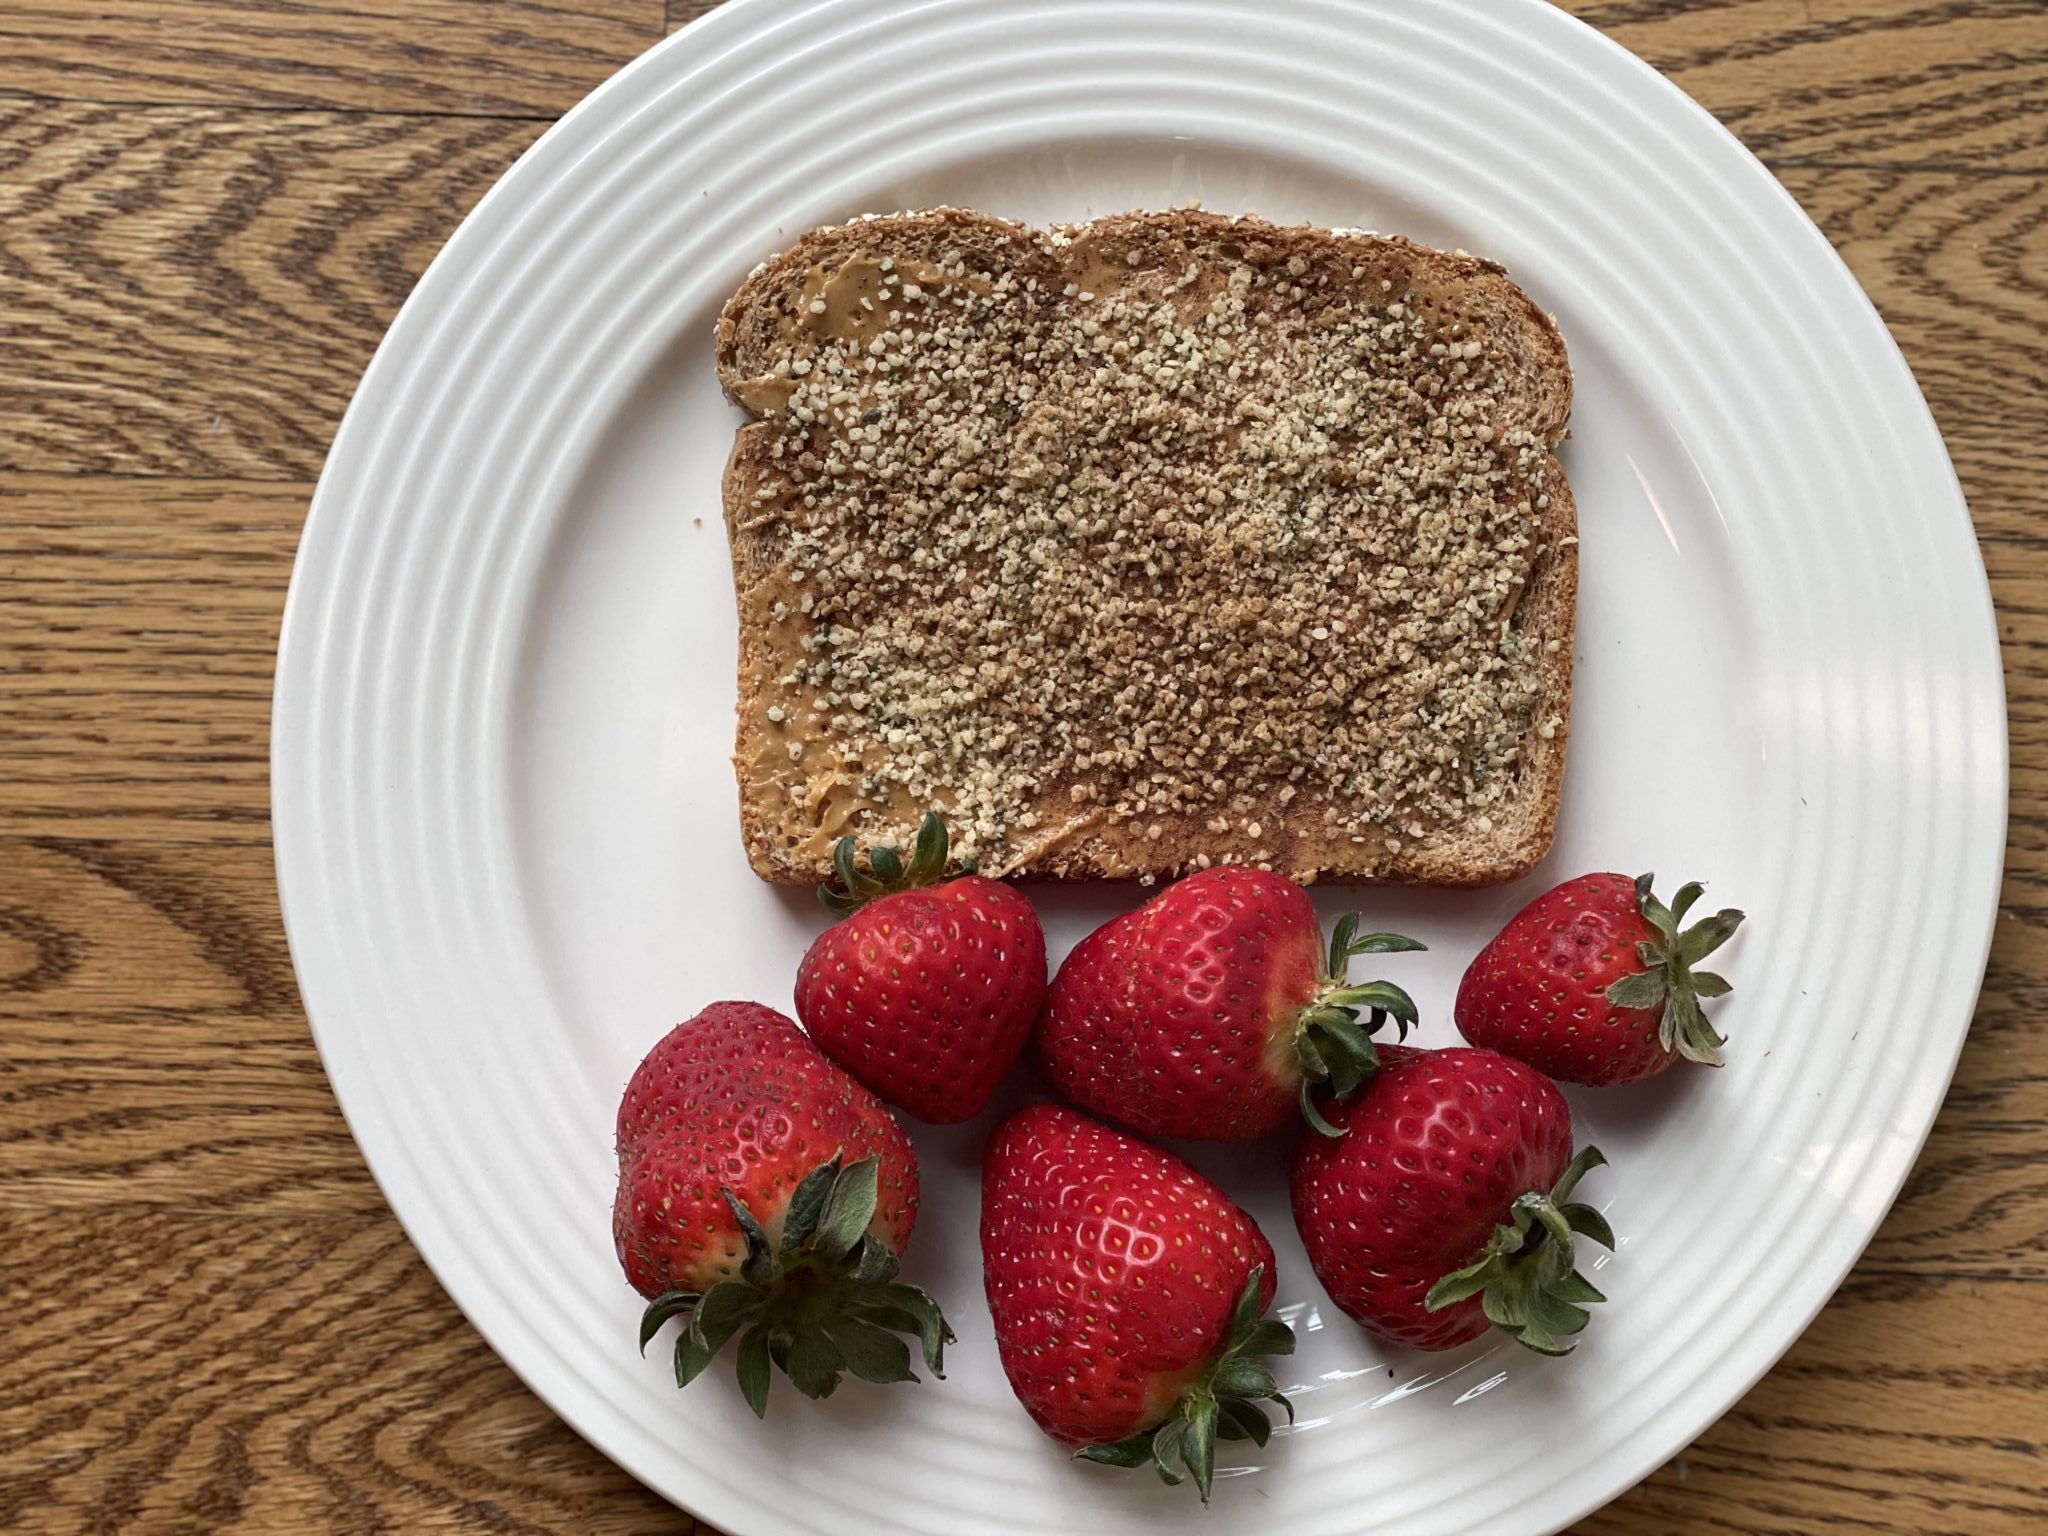 Peanut butter toast with hemp seeds, cinnamon and strawberries